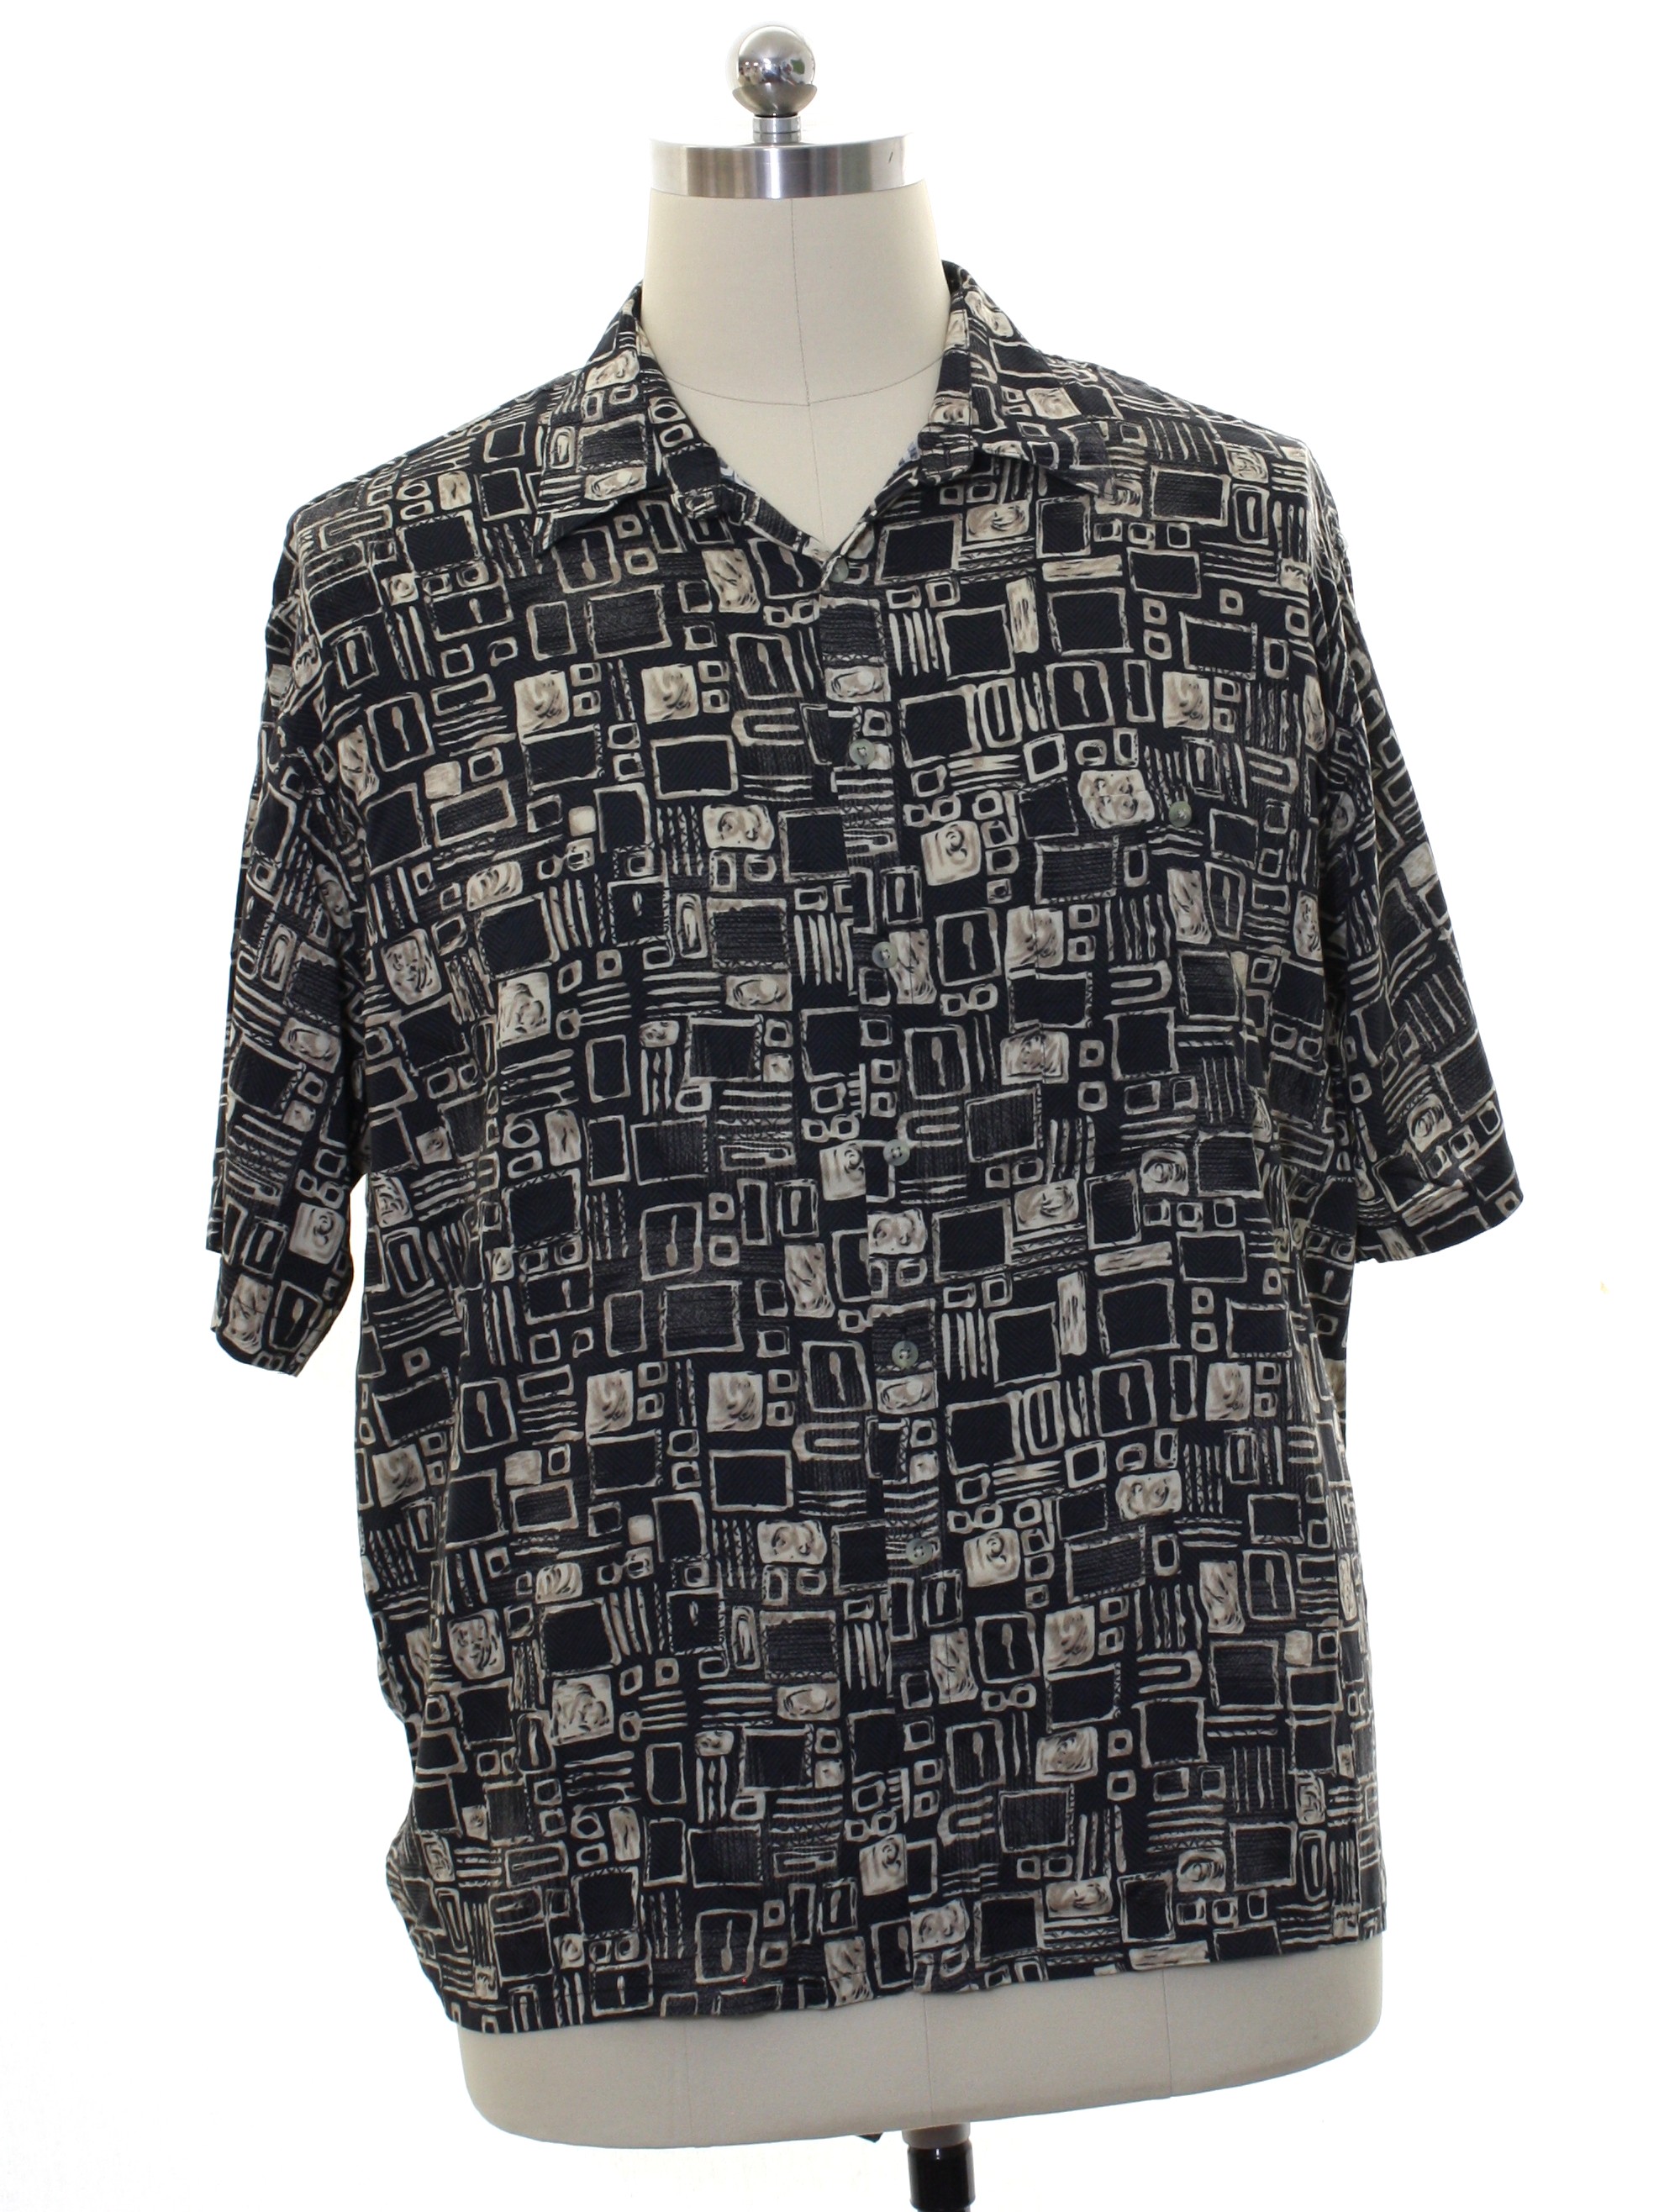 Retro 90s Shirt (Campia) : 90s -Campia- Mens charcoal black background ...